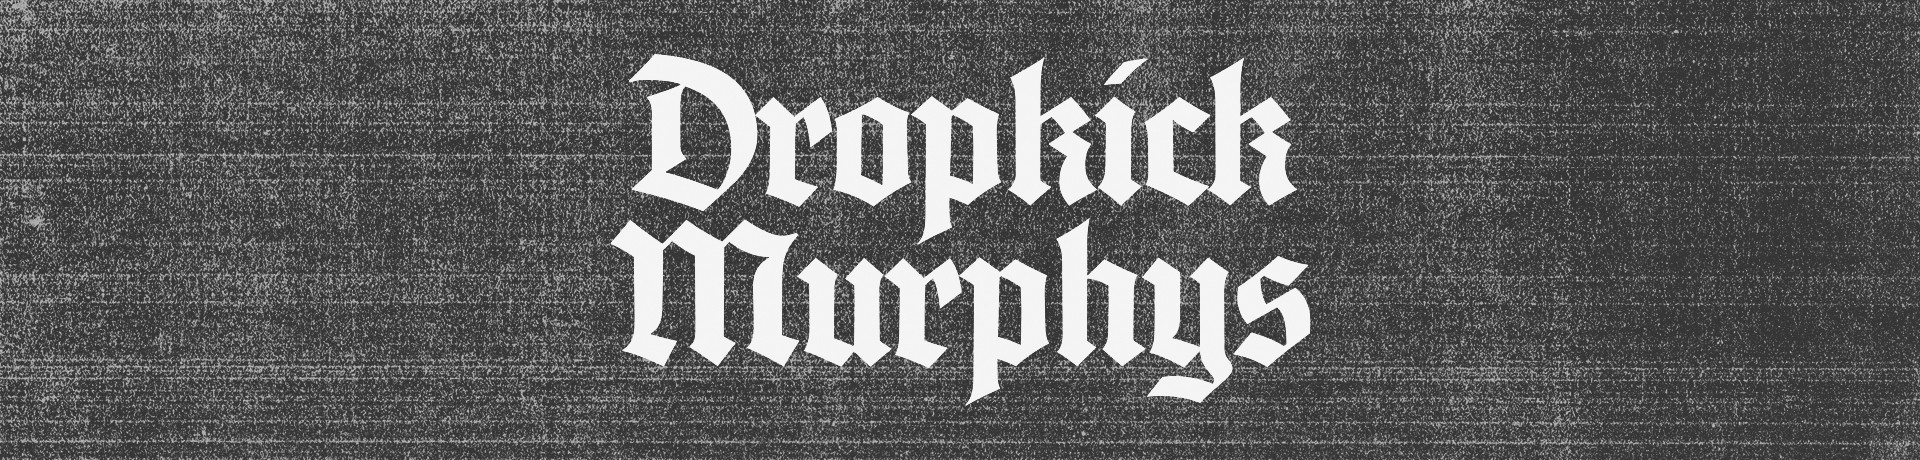 Dropkick Murphys - FC St Pauli Collab